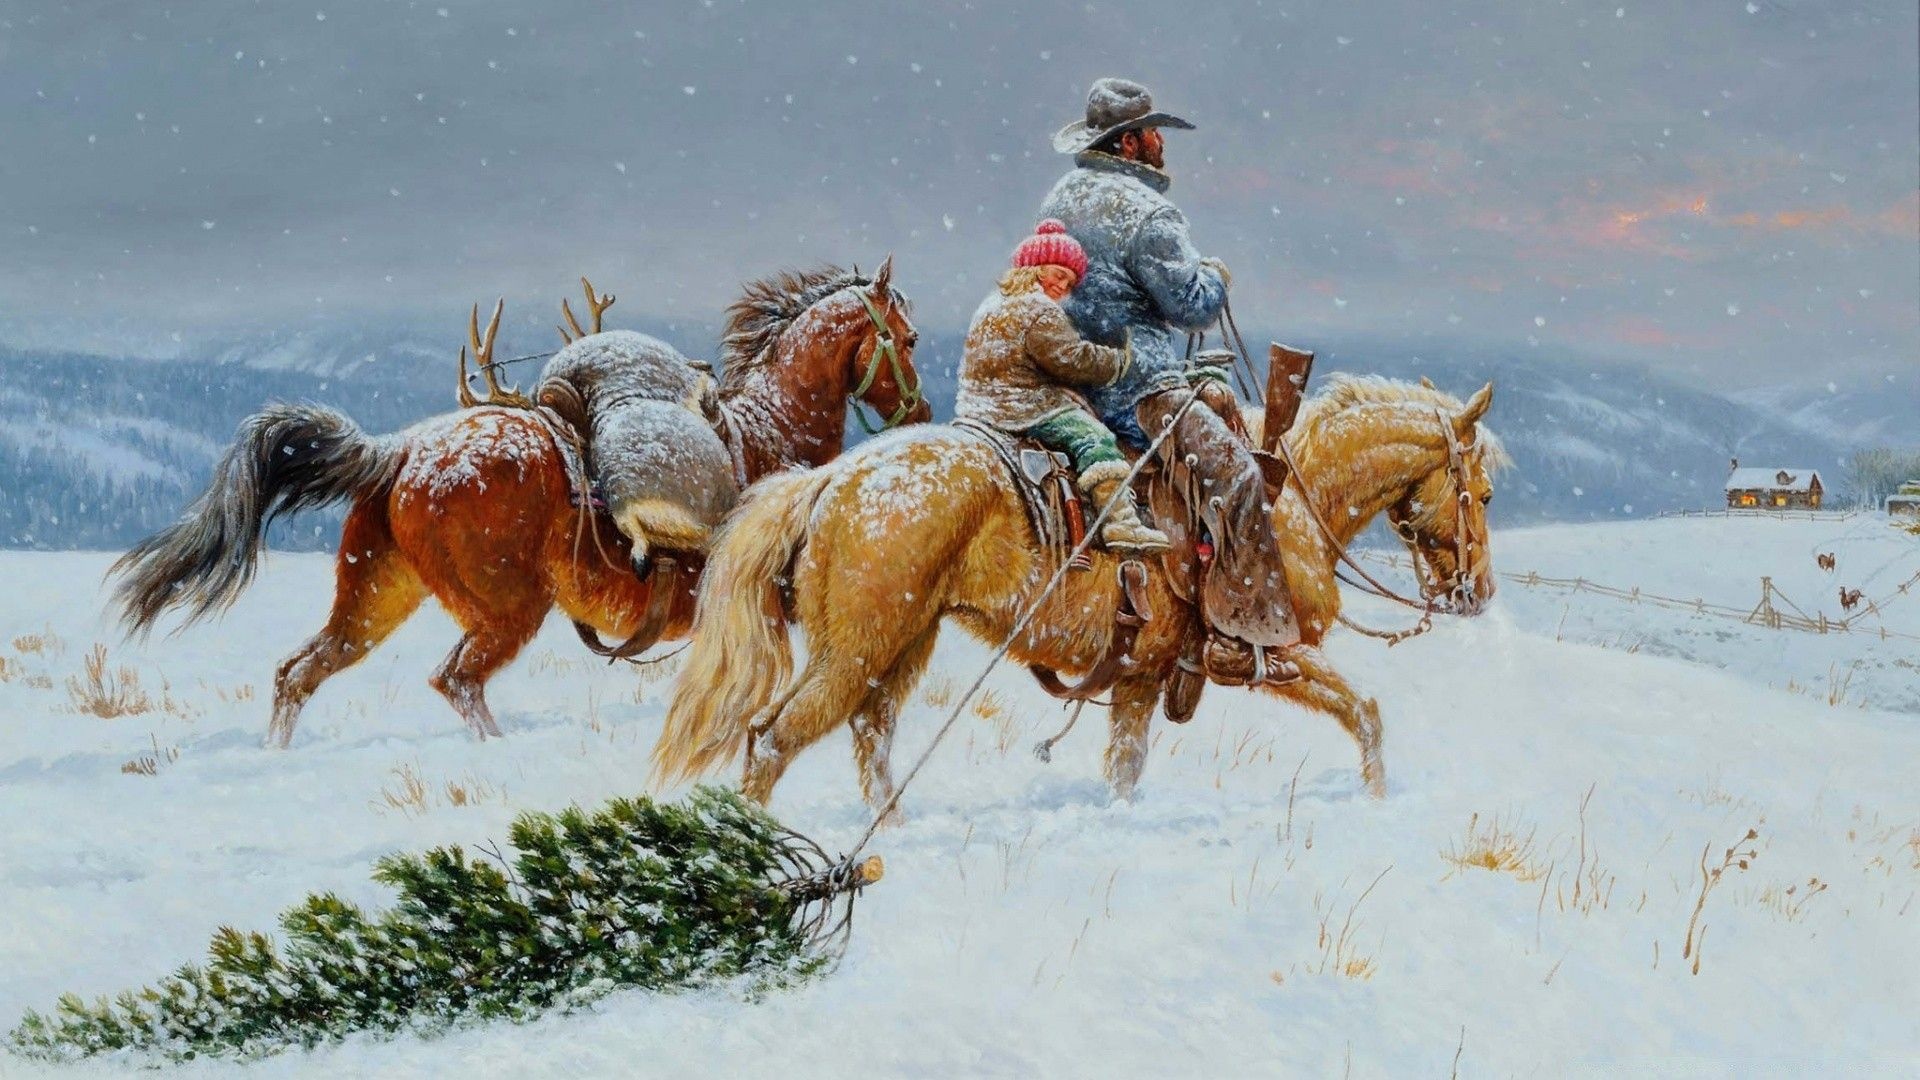 Snowy horses, Winter wonderland, Majestic creatures, Christmas spirit, 1920x1080 Full HD Desktop